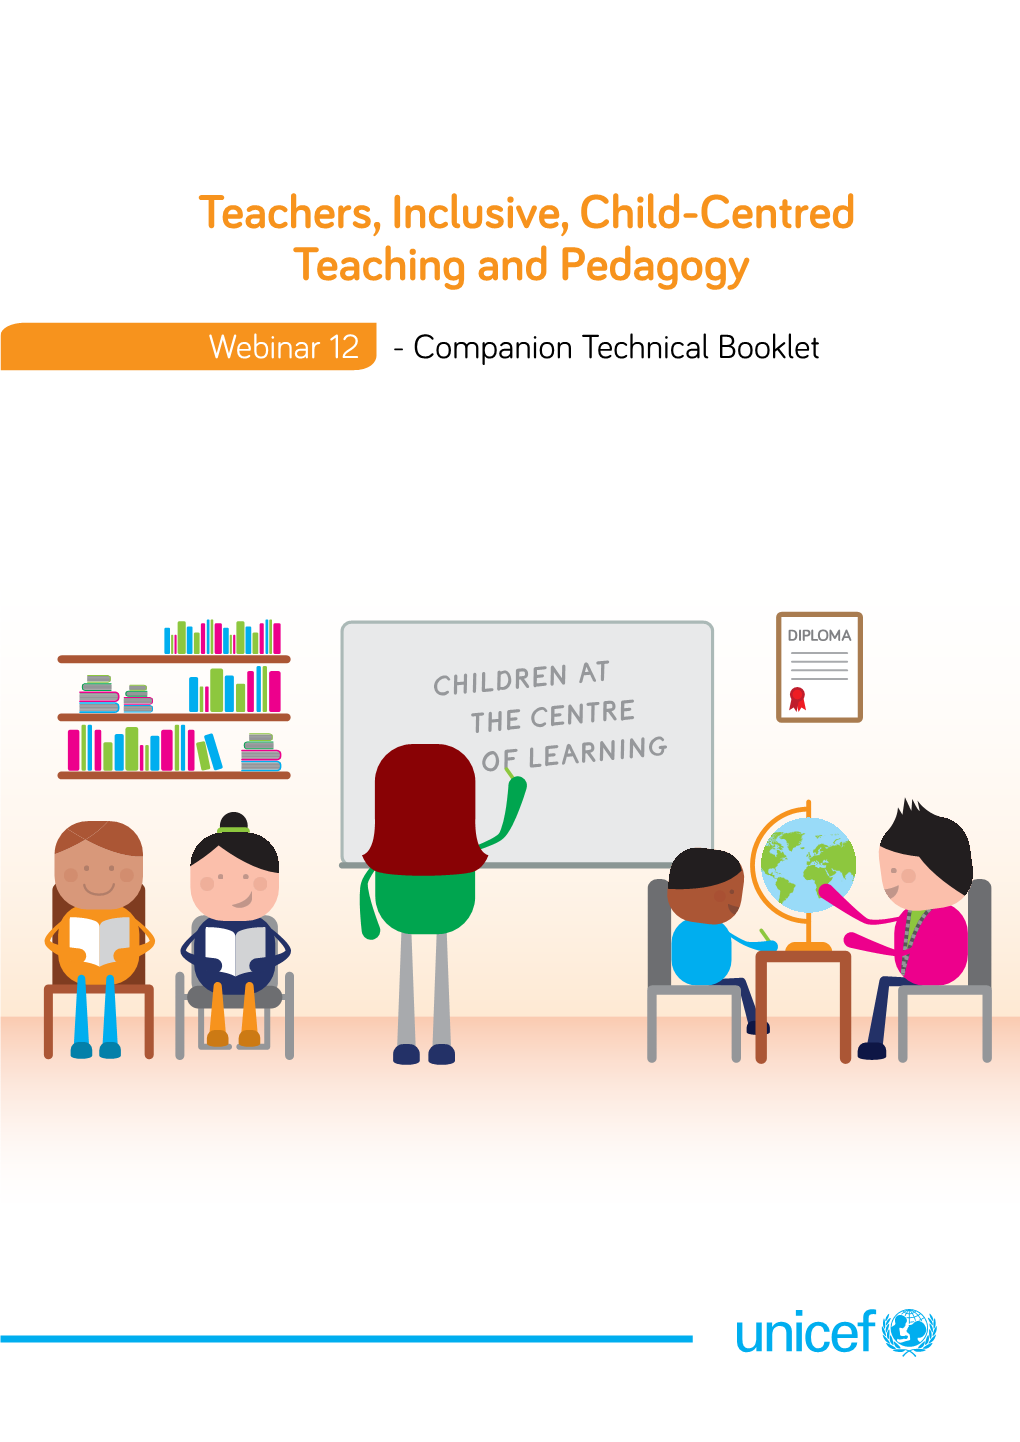 Teachers, Inclusive, Child-Centred Teaching and Pedagogy Webinar Booklet